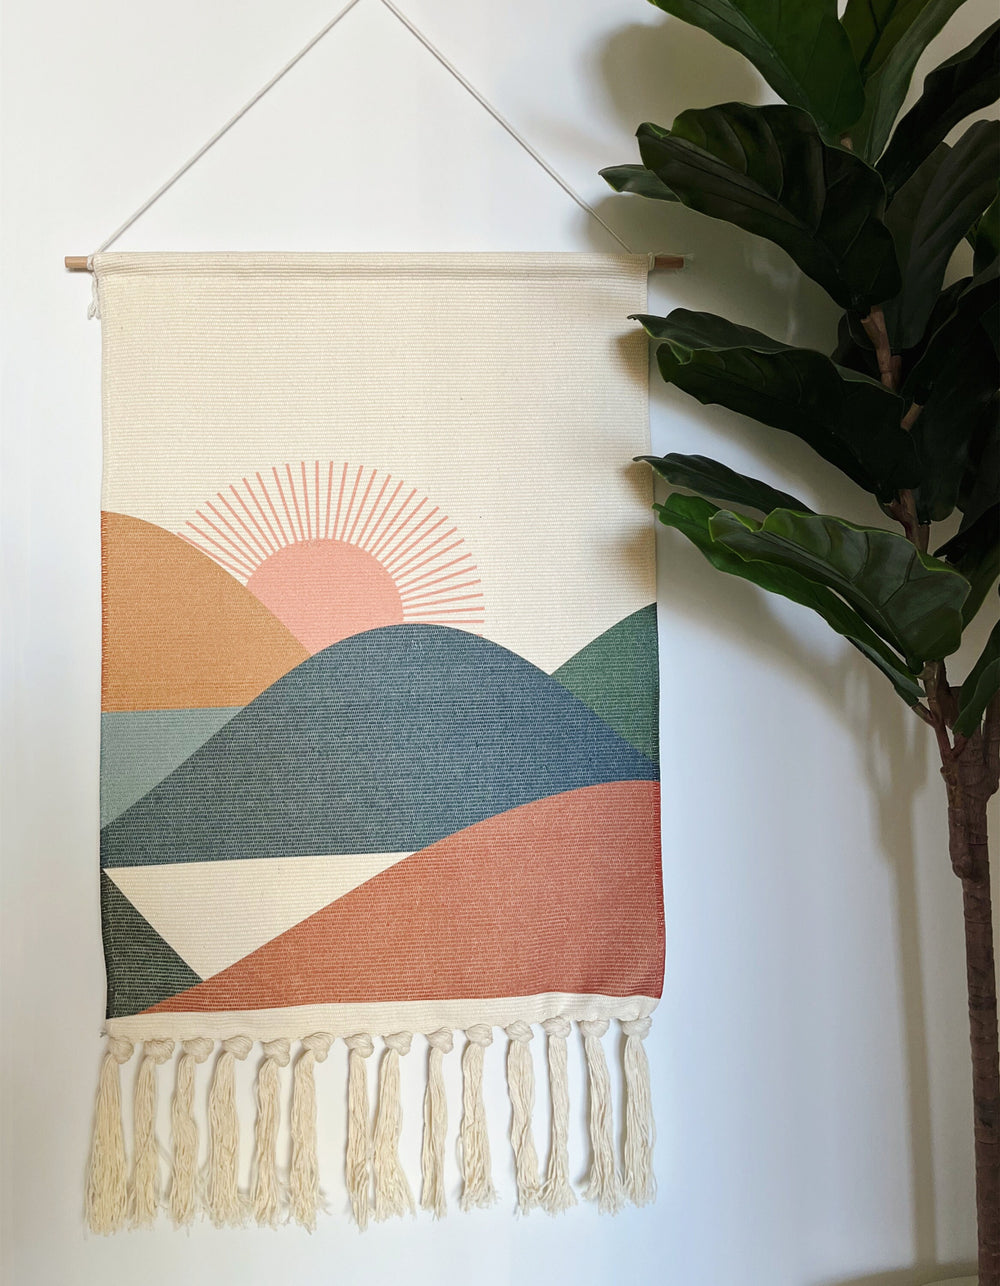 Handmade Macrame Hanging Wall Decor Art/Wall Hanging Woven Tapestry/Woven Macrame Home Decoration Gift/ Bright Color Wall decoration